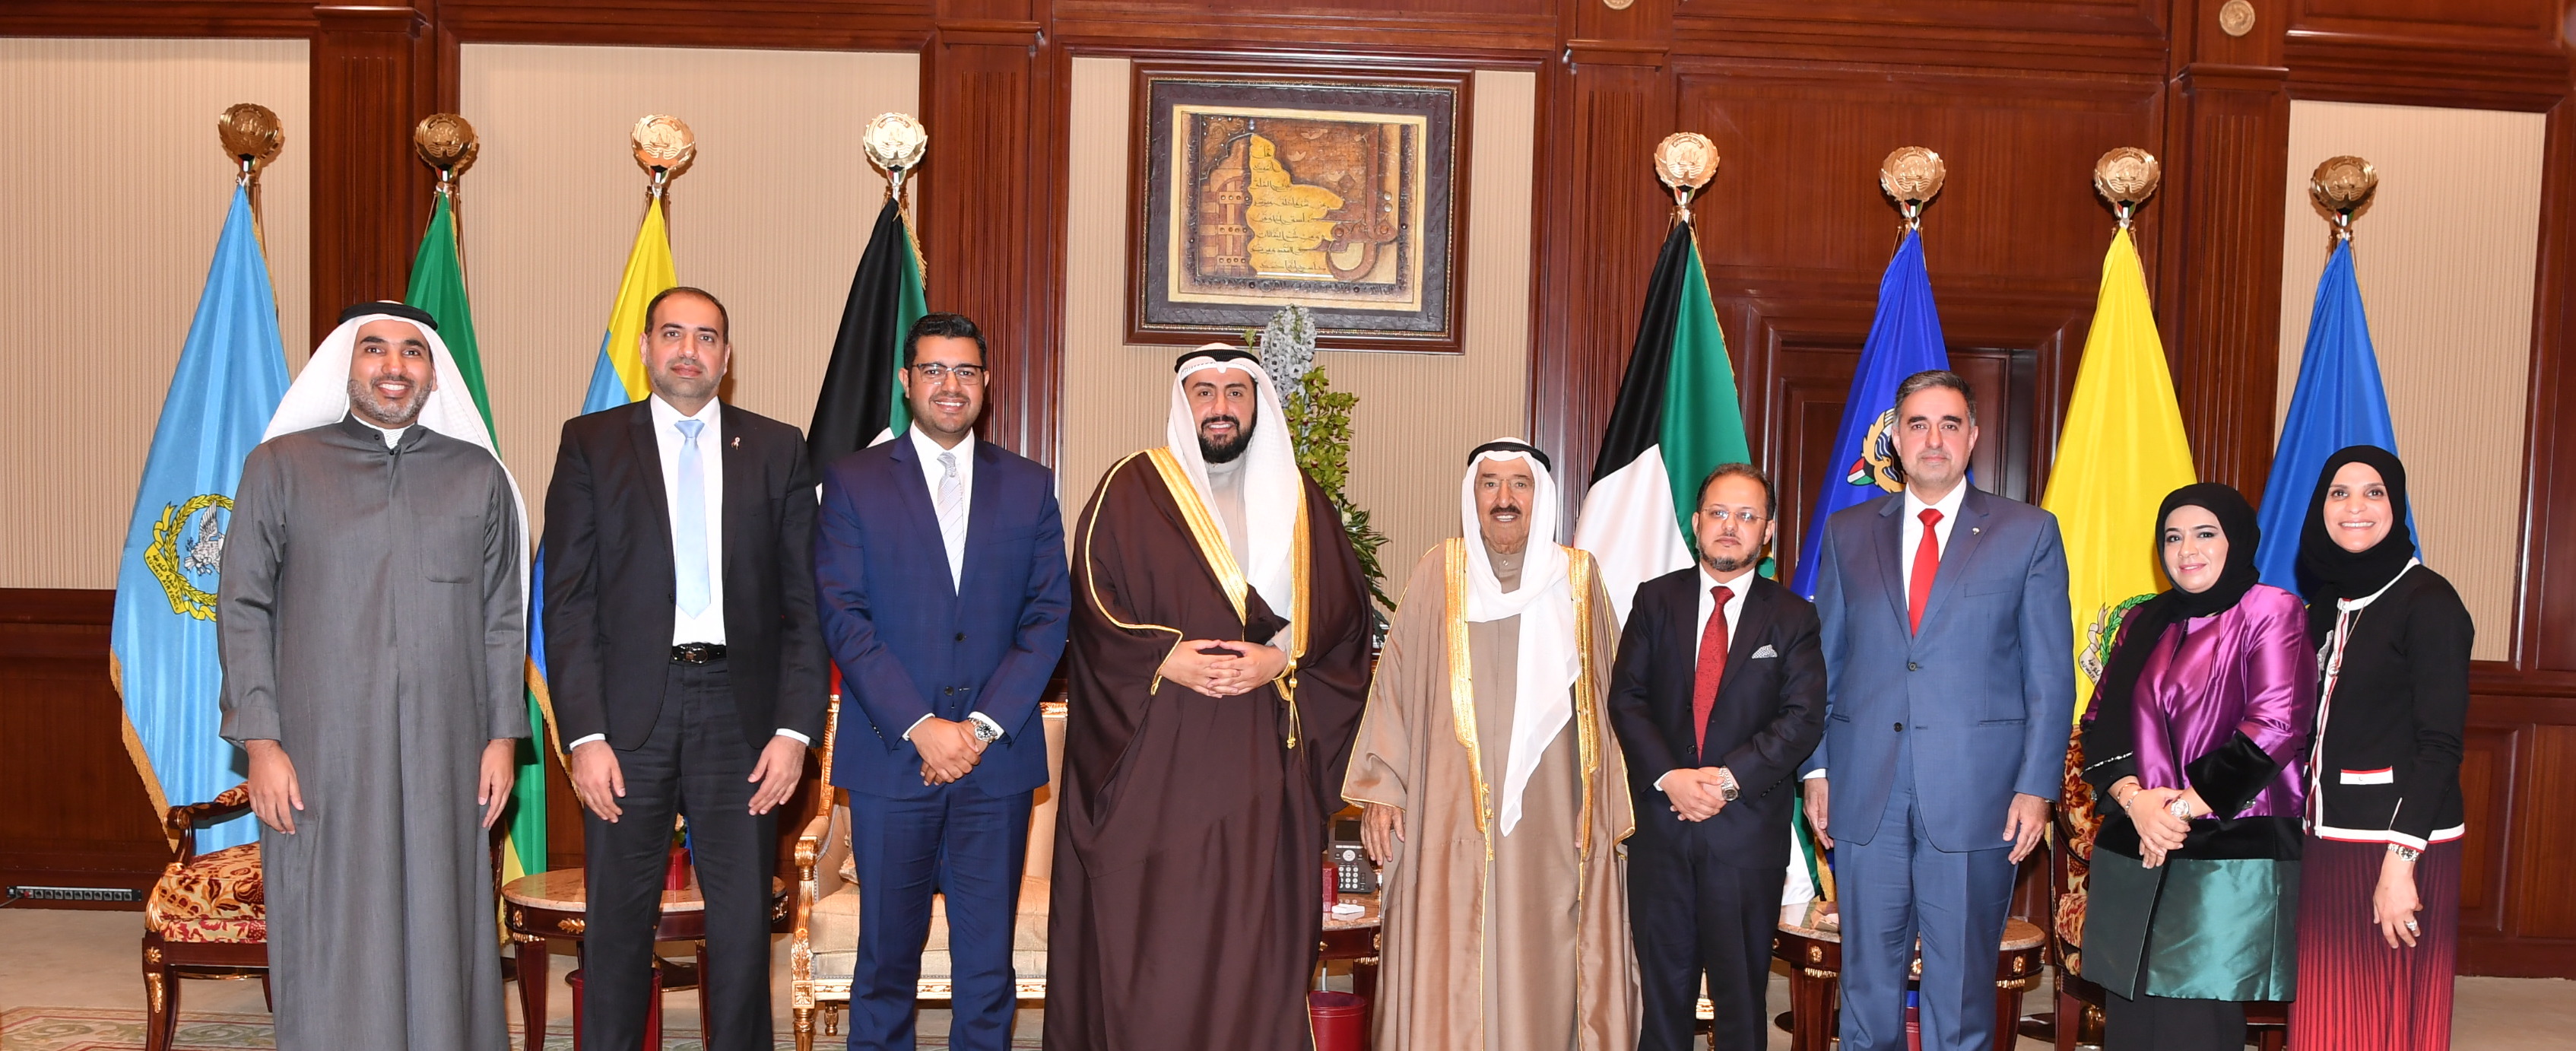 His Highness the Amir Sheikh Sabah Al-Ahmad Al-Jaber Al-Sabah meets with the president of Kuwait Medical Association (KMA) Dr. Ahmad Al-Enezi, alongside Kuwait's Health Minister Dr. Basel Al-Sabah